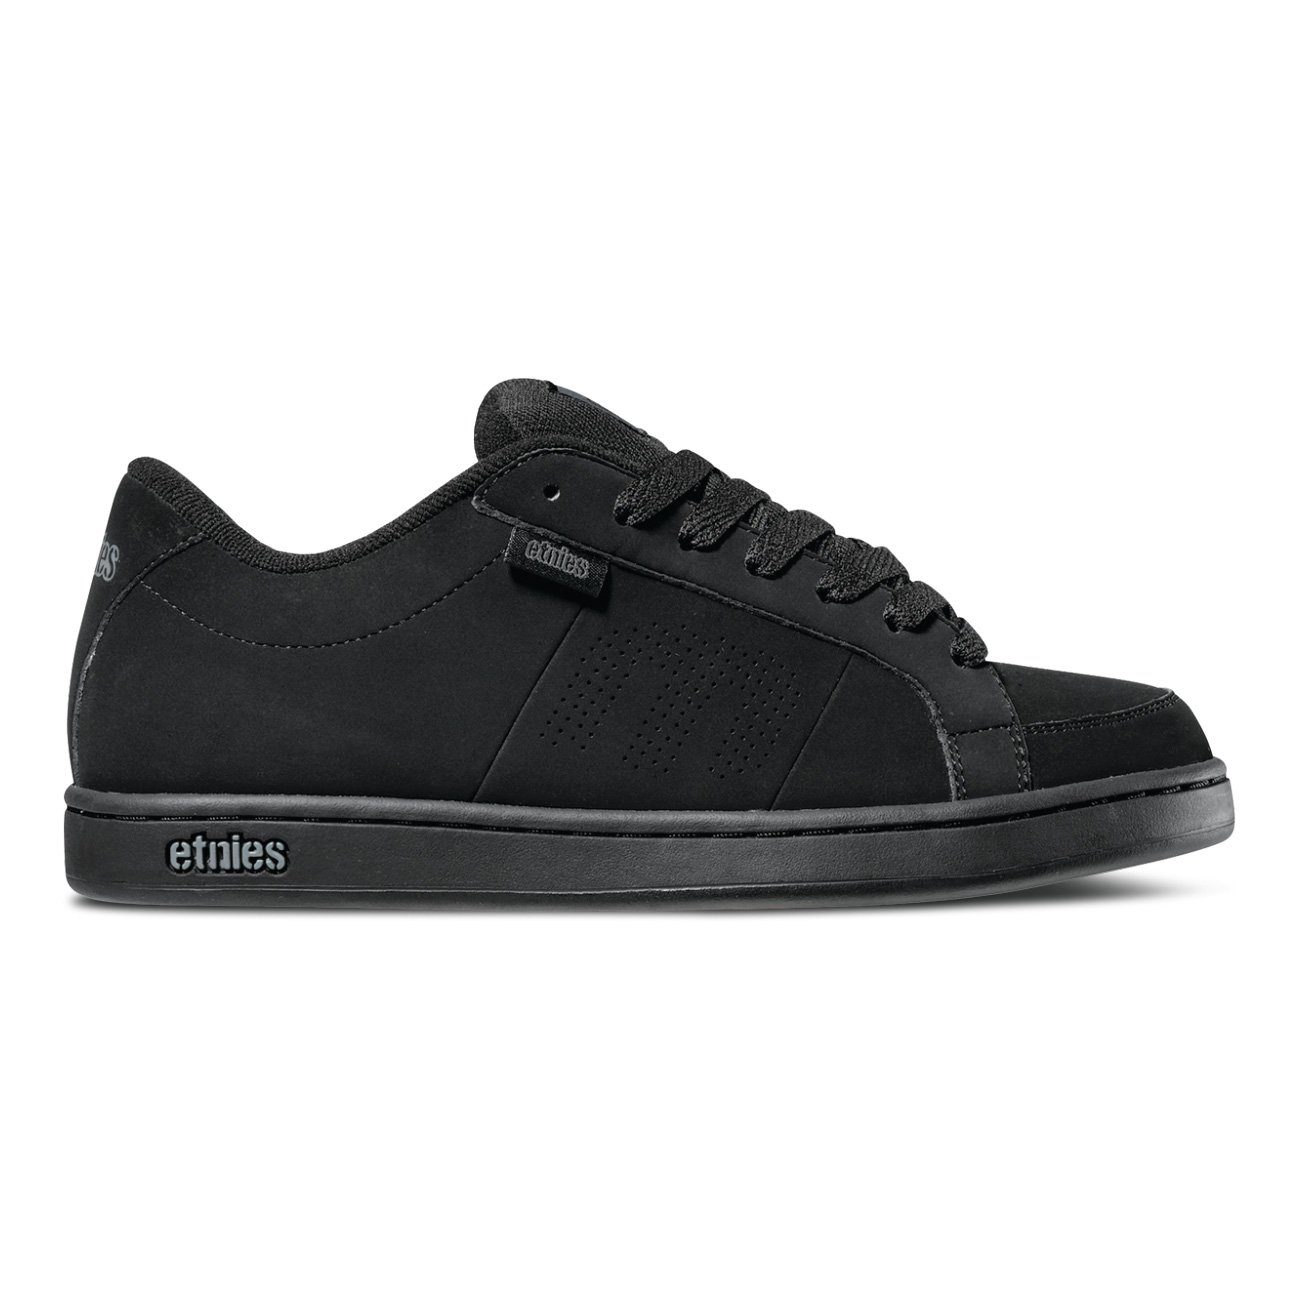 Schuhe Sneaker etnies Kingpin - black/black Sneaker